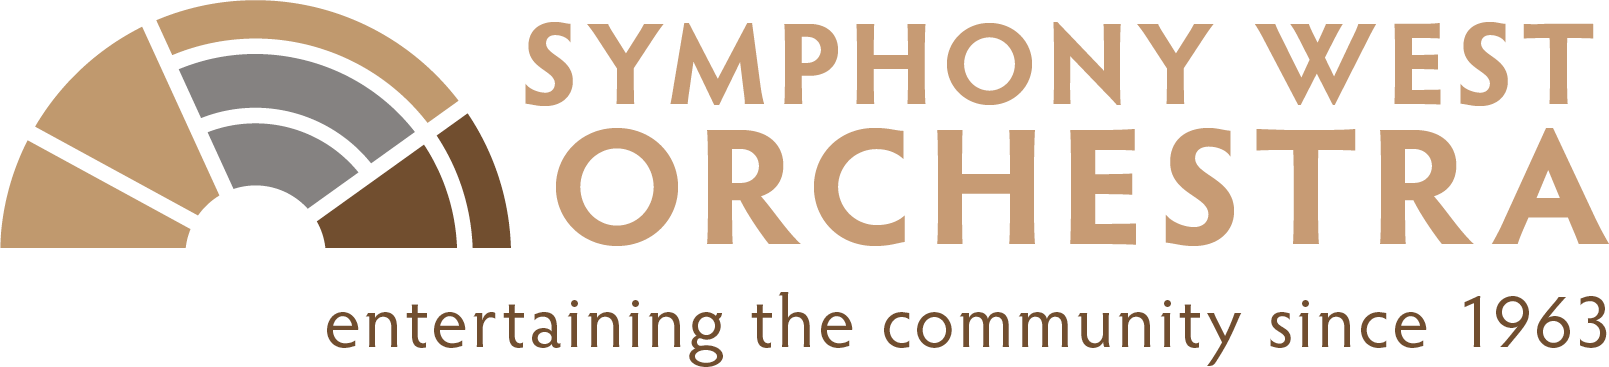 Symphony West Orchestra